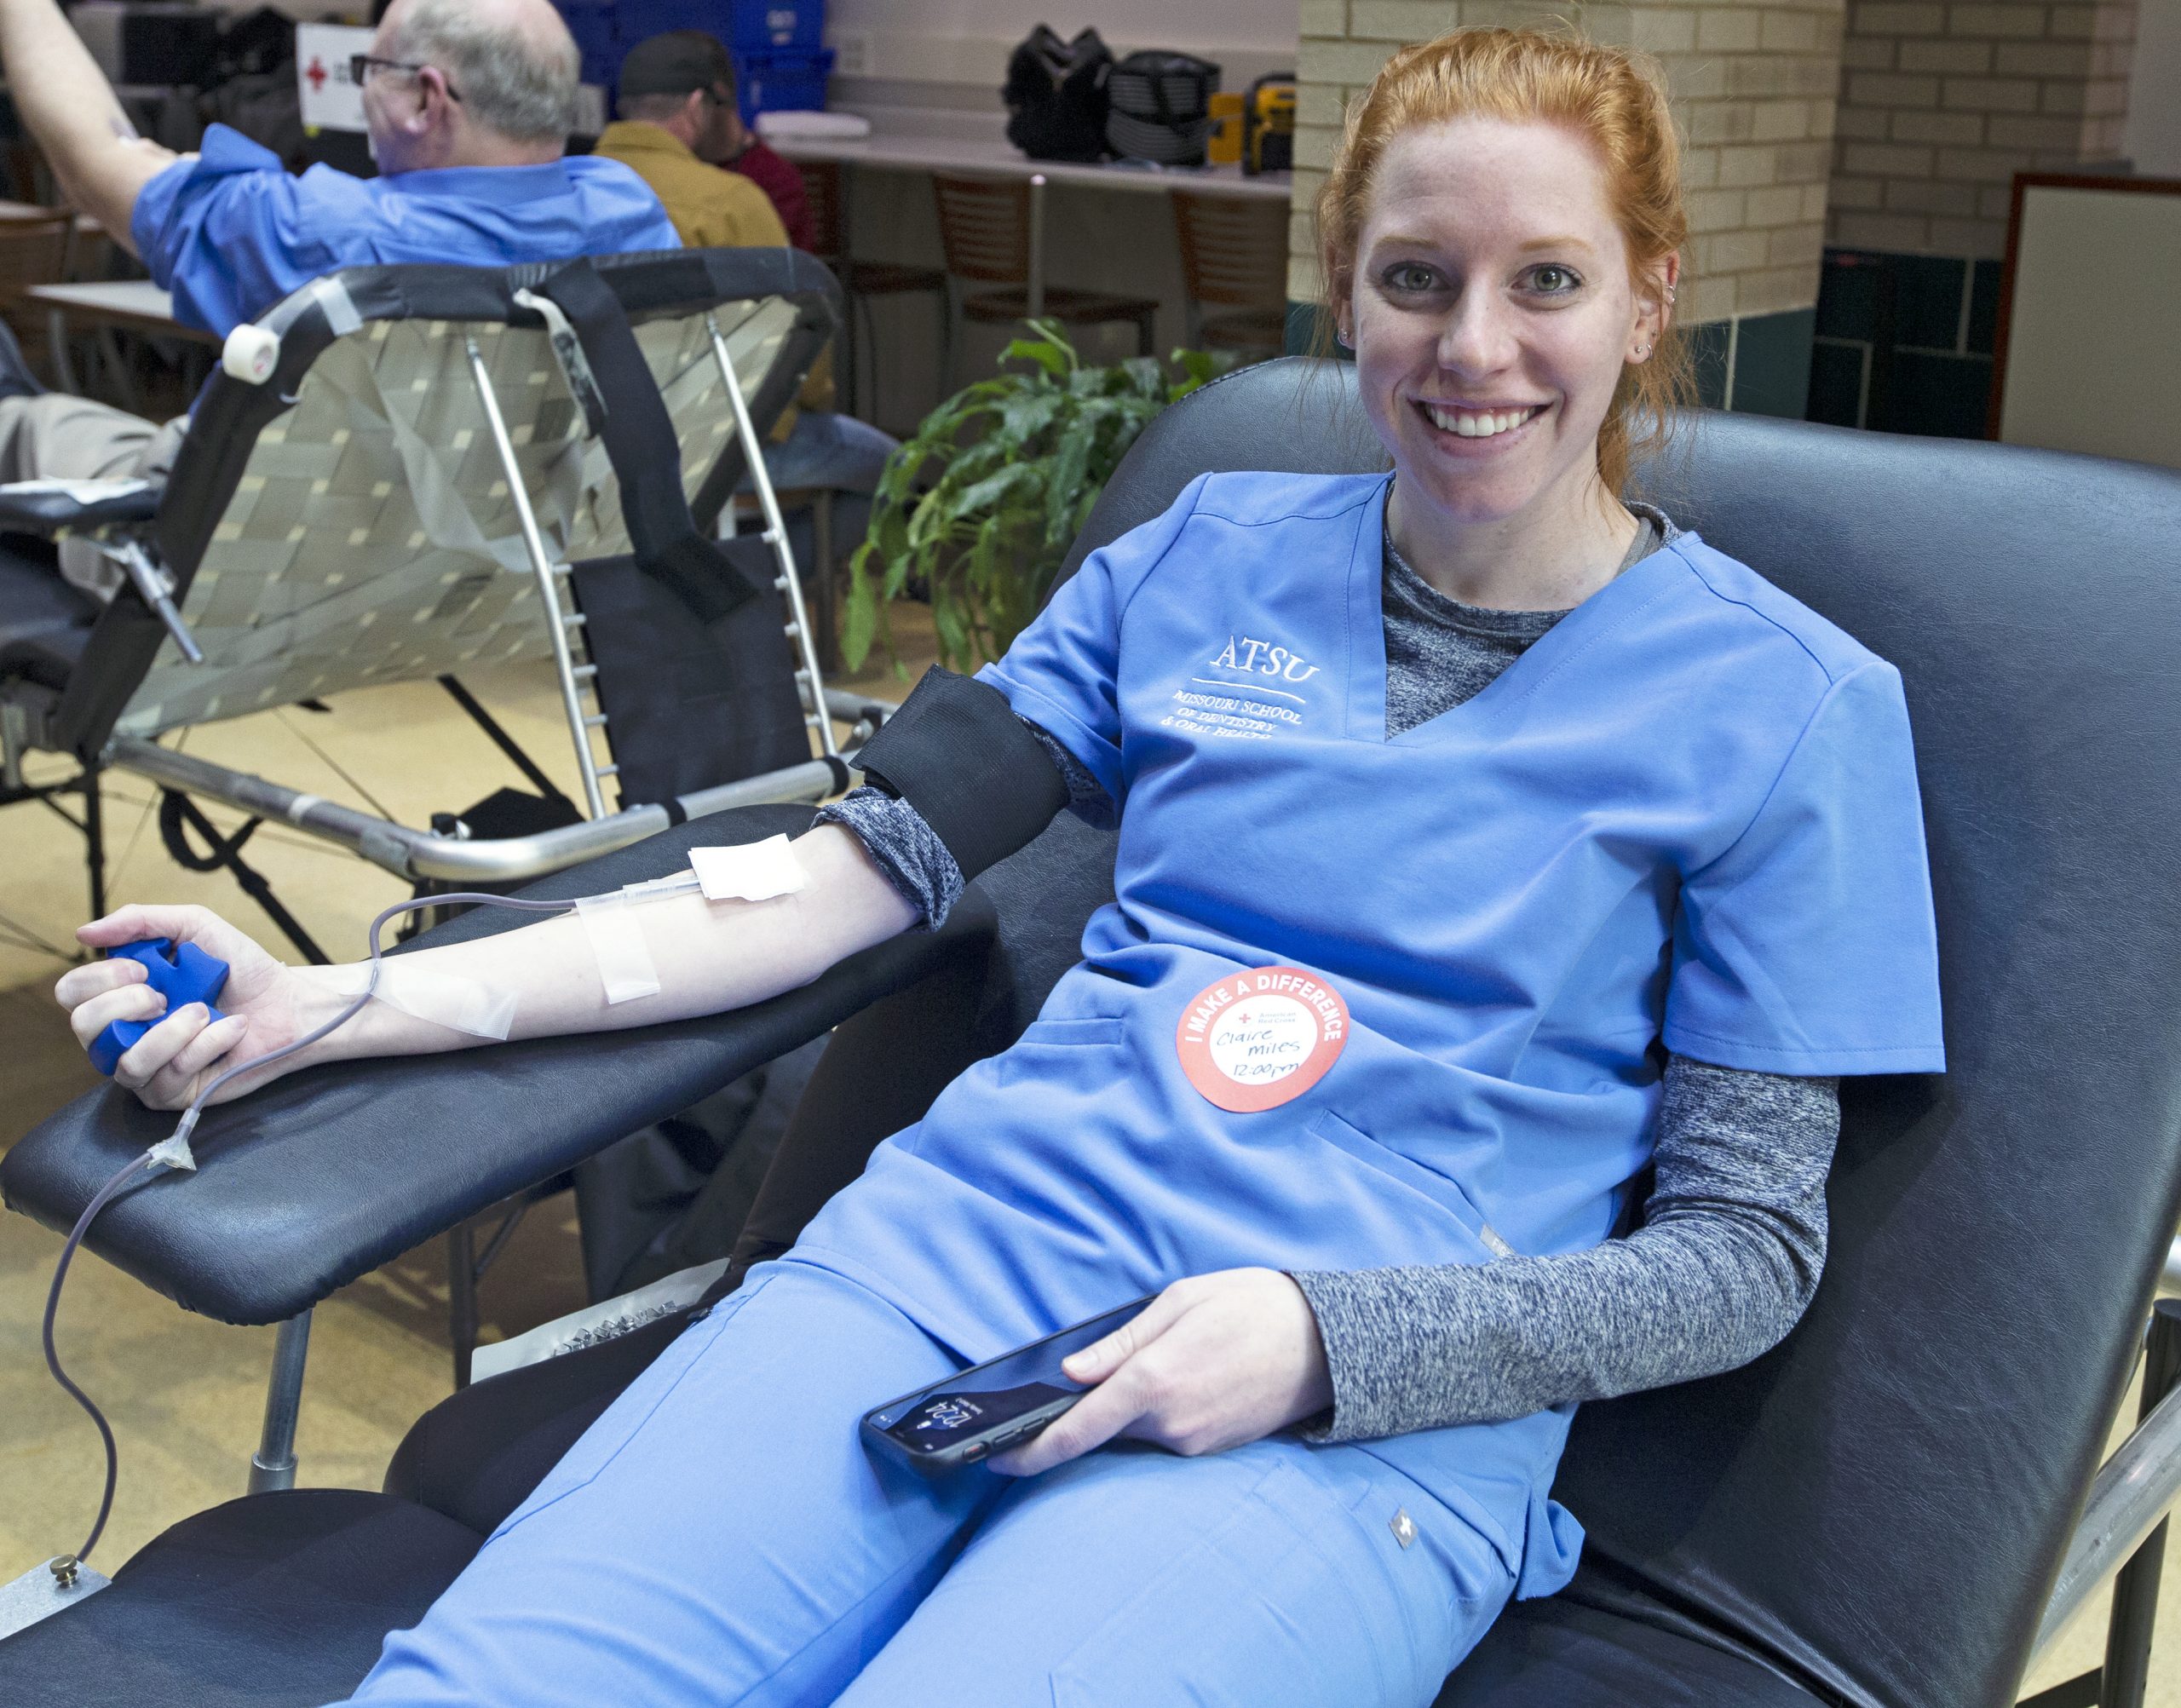 ATSU-MOSDOH student Claire Miles, D2, smiles as she donates blood